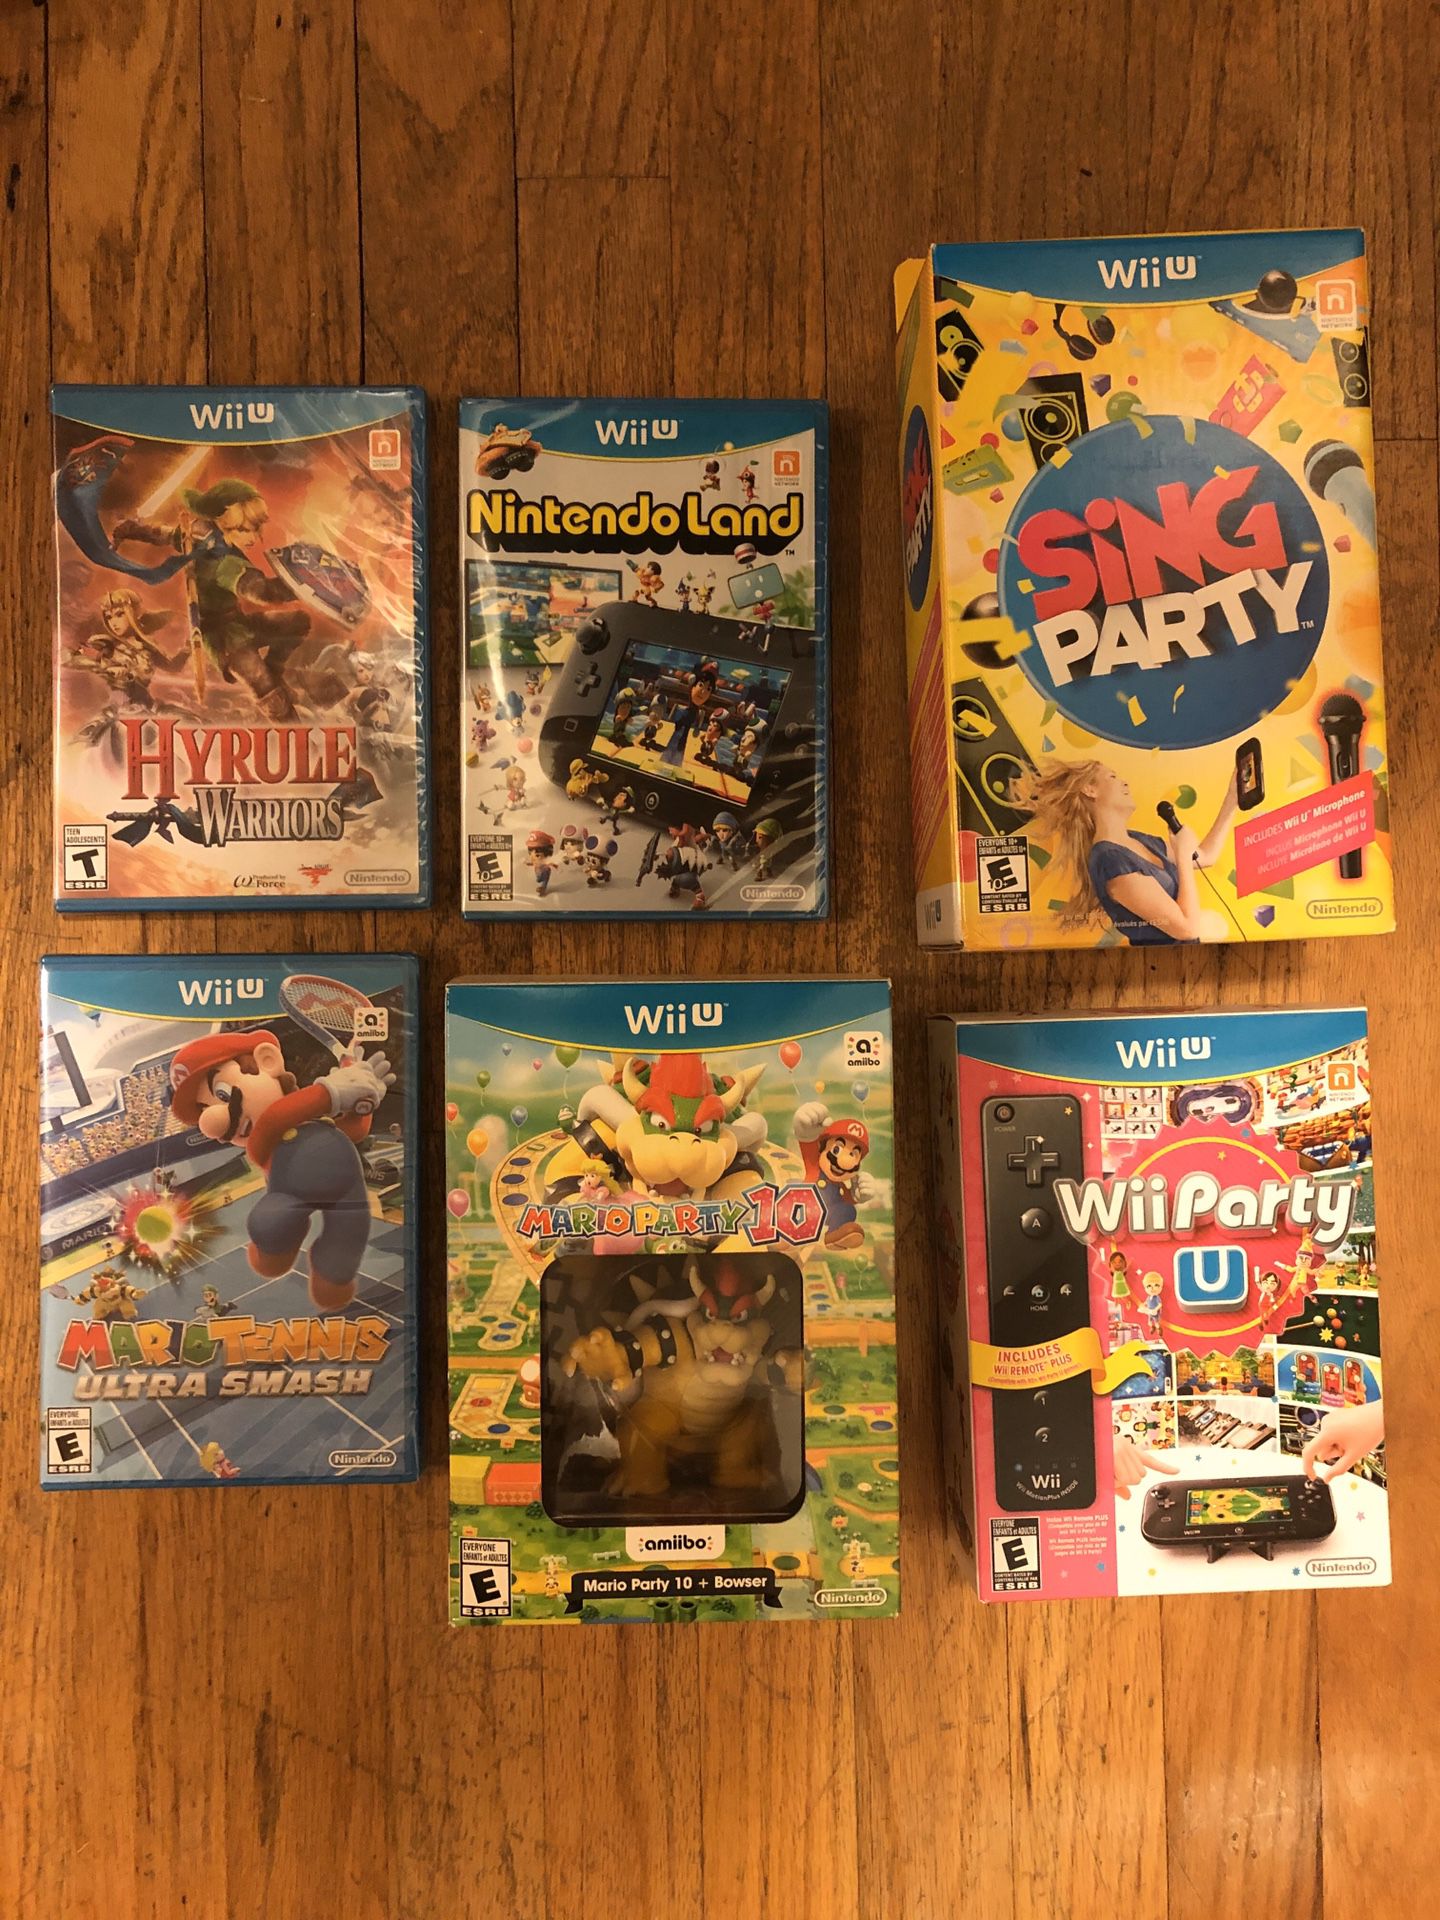 Nintendo Wii Party Lot - WiiParty, Mario Party 10, Mario Tennis, Sing Party, Nintendo Land, Hyrule Warriors